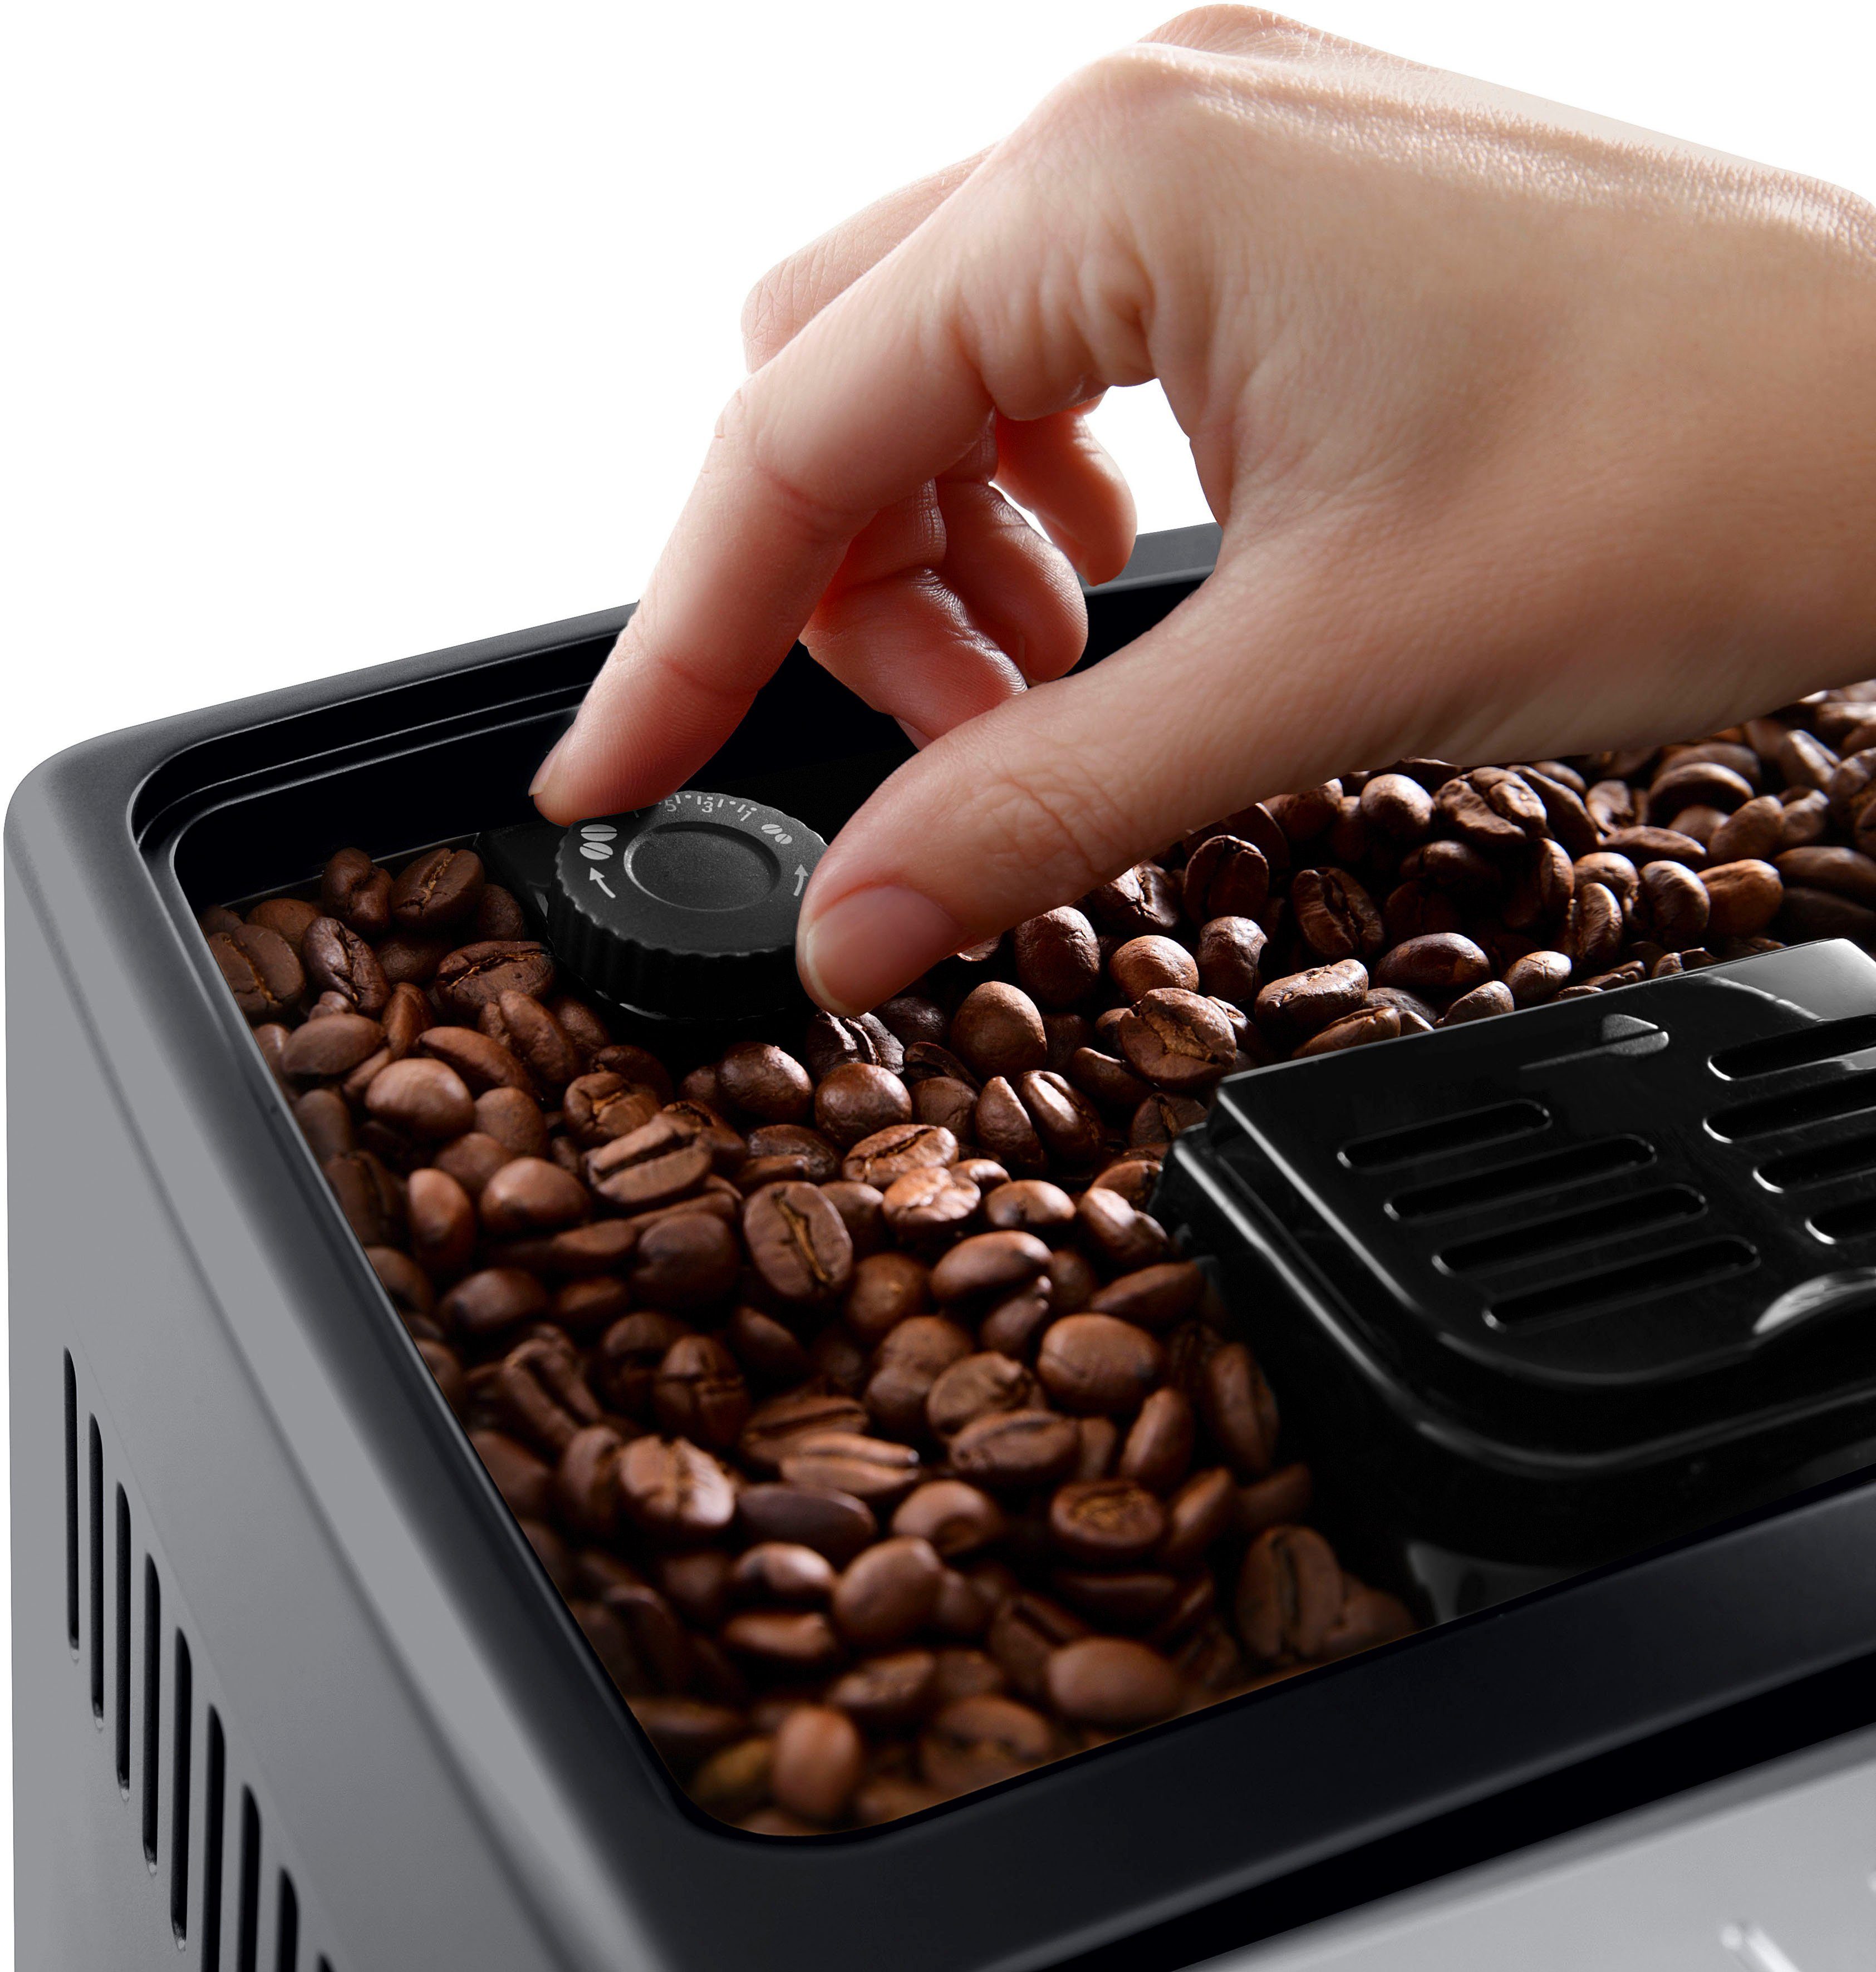 Dinamica und mit ECAM 370.70.B, Milchsystem LatteCrema Kaffeevollautomat De'Longhi Kaffeekannenfunktion Plus